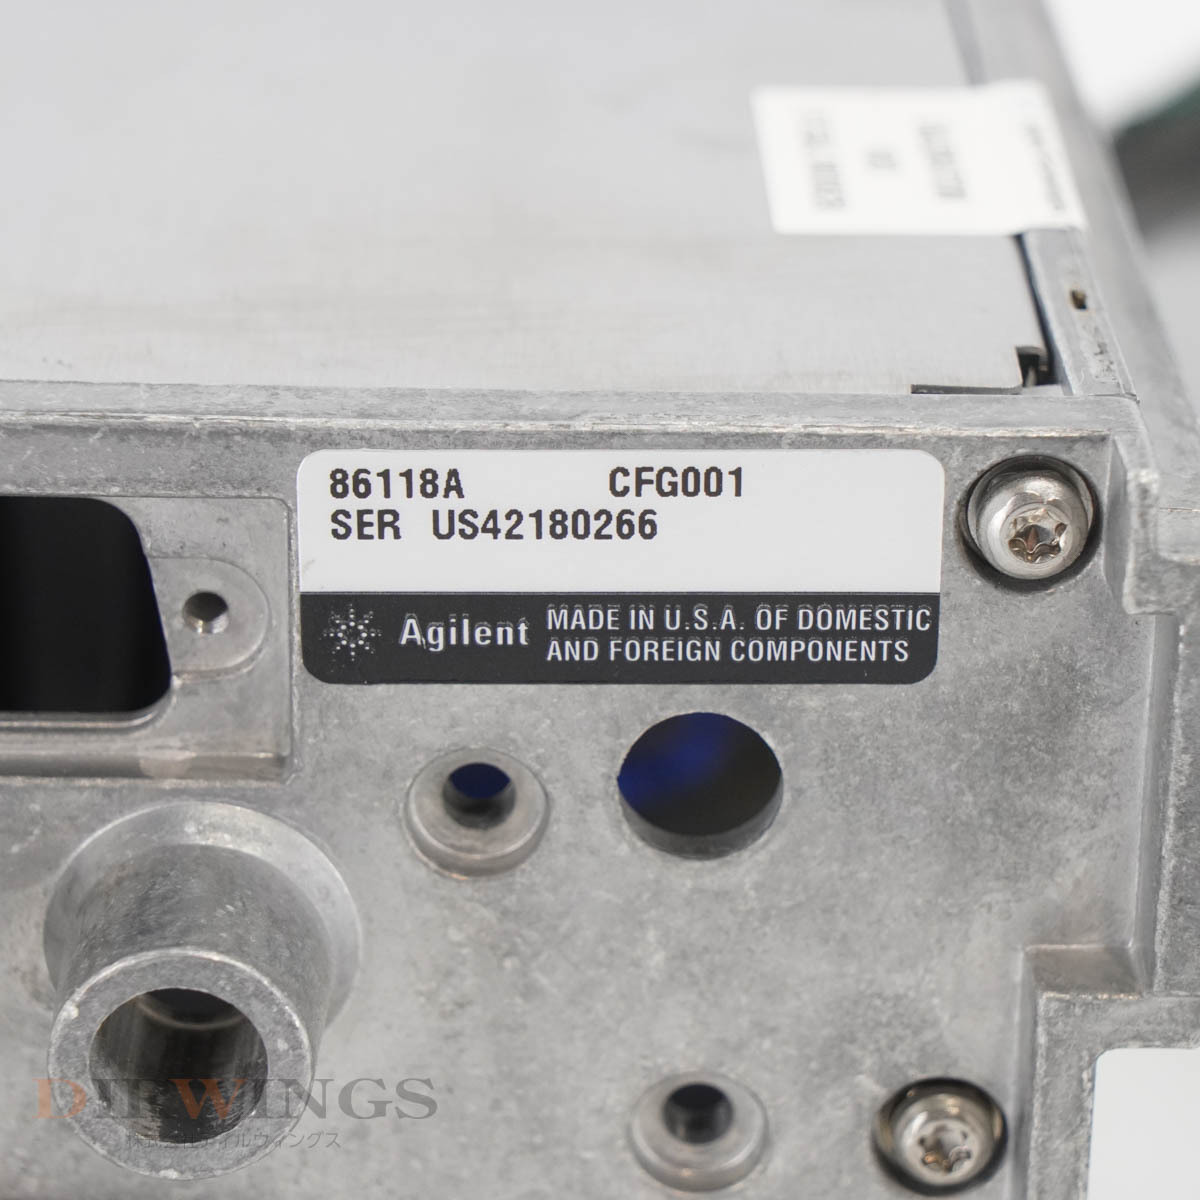 [JB] 保証なし 86118A Agilent CFG001 hp Keysight 70GHz Remote Sampling Module Oscilloscope Electrical Module リモー...[05791-0498]の画像9